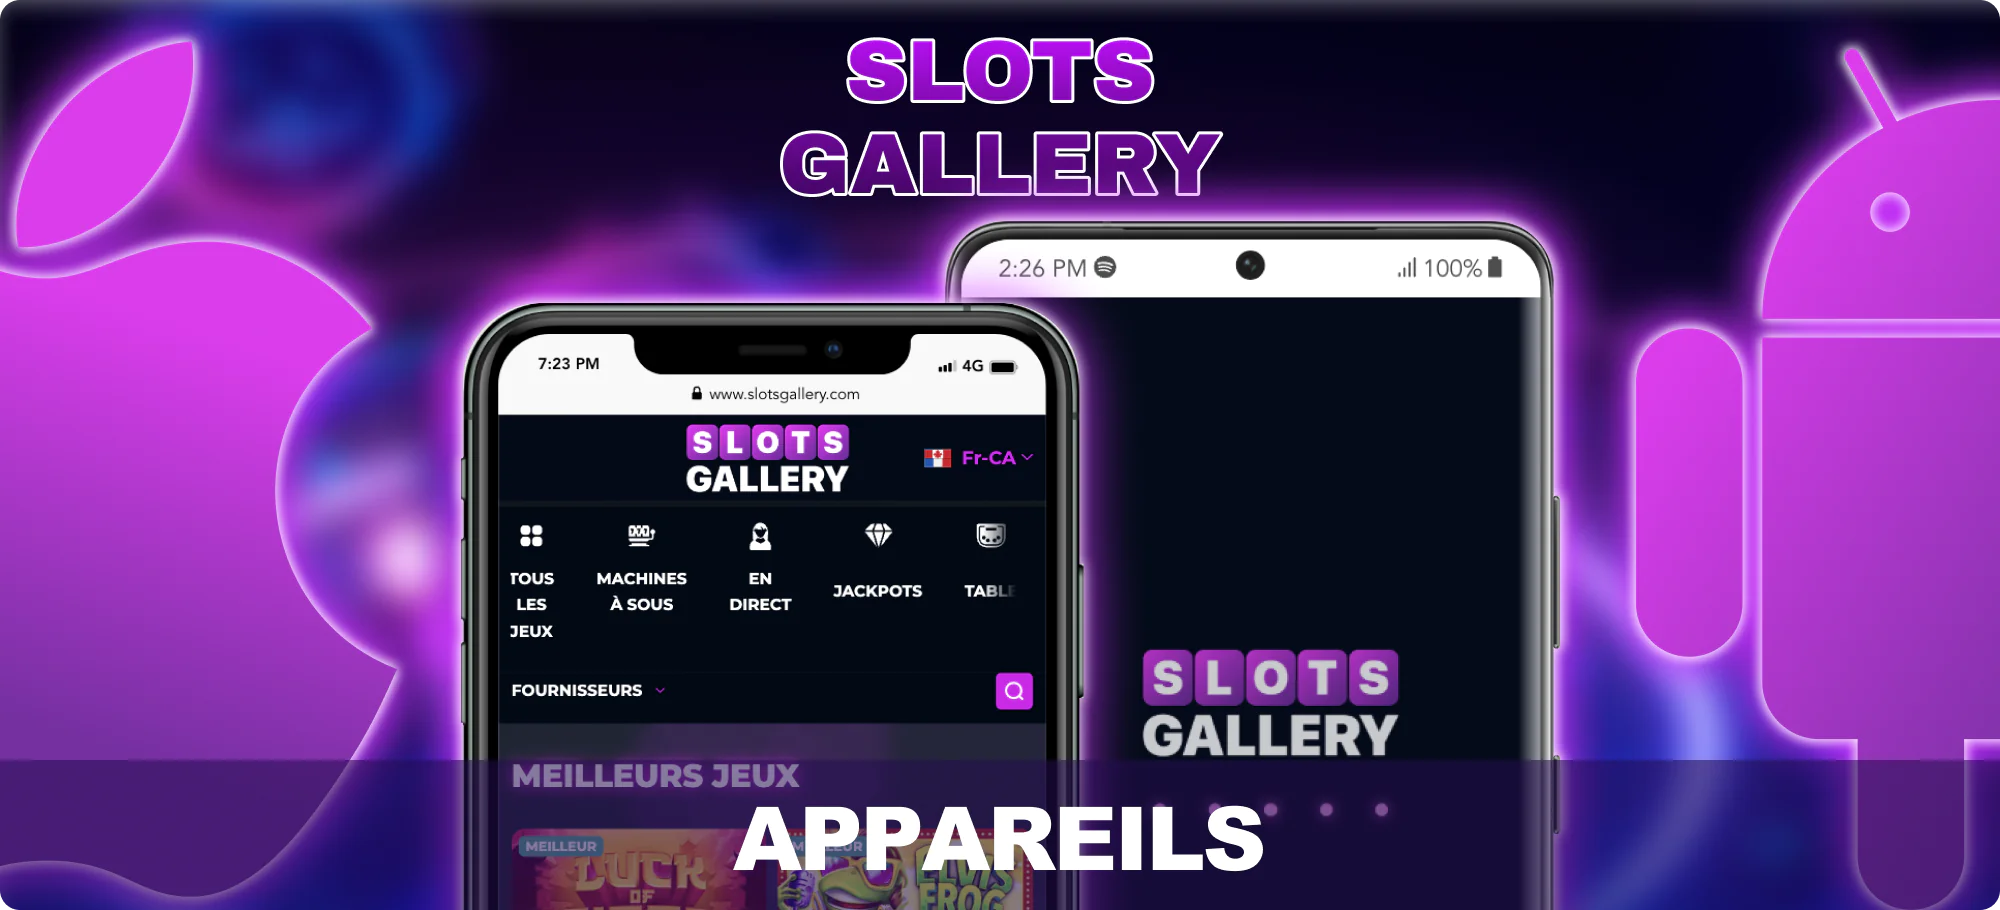 Slots Gallery Canada - Appareils compatibles avec l'application